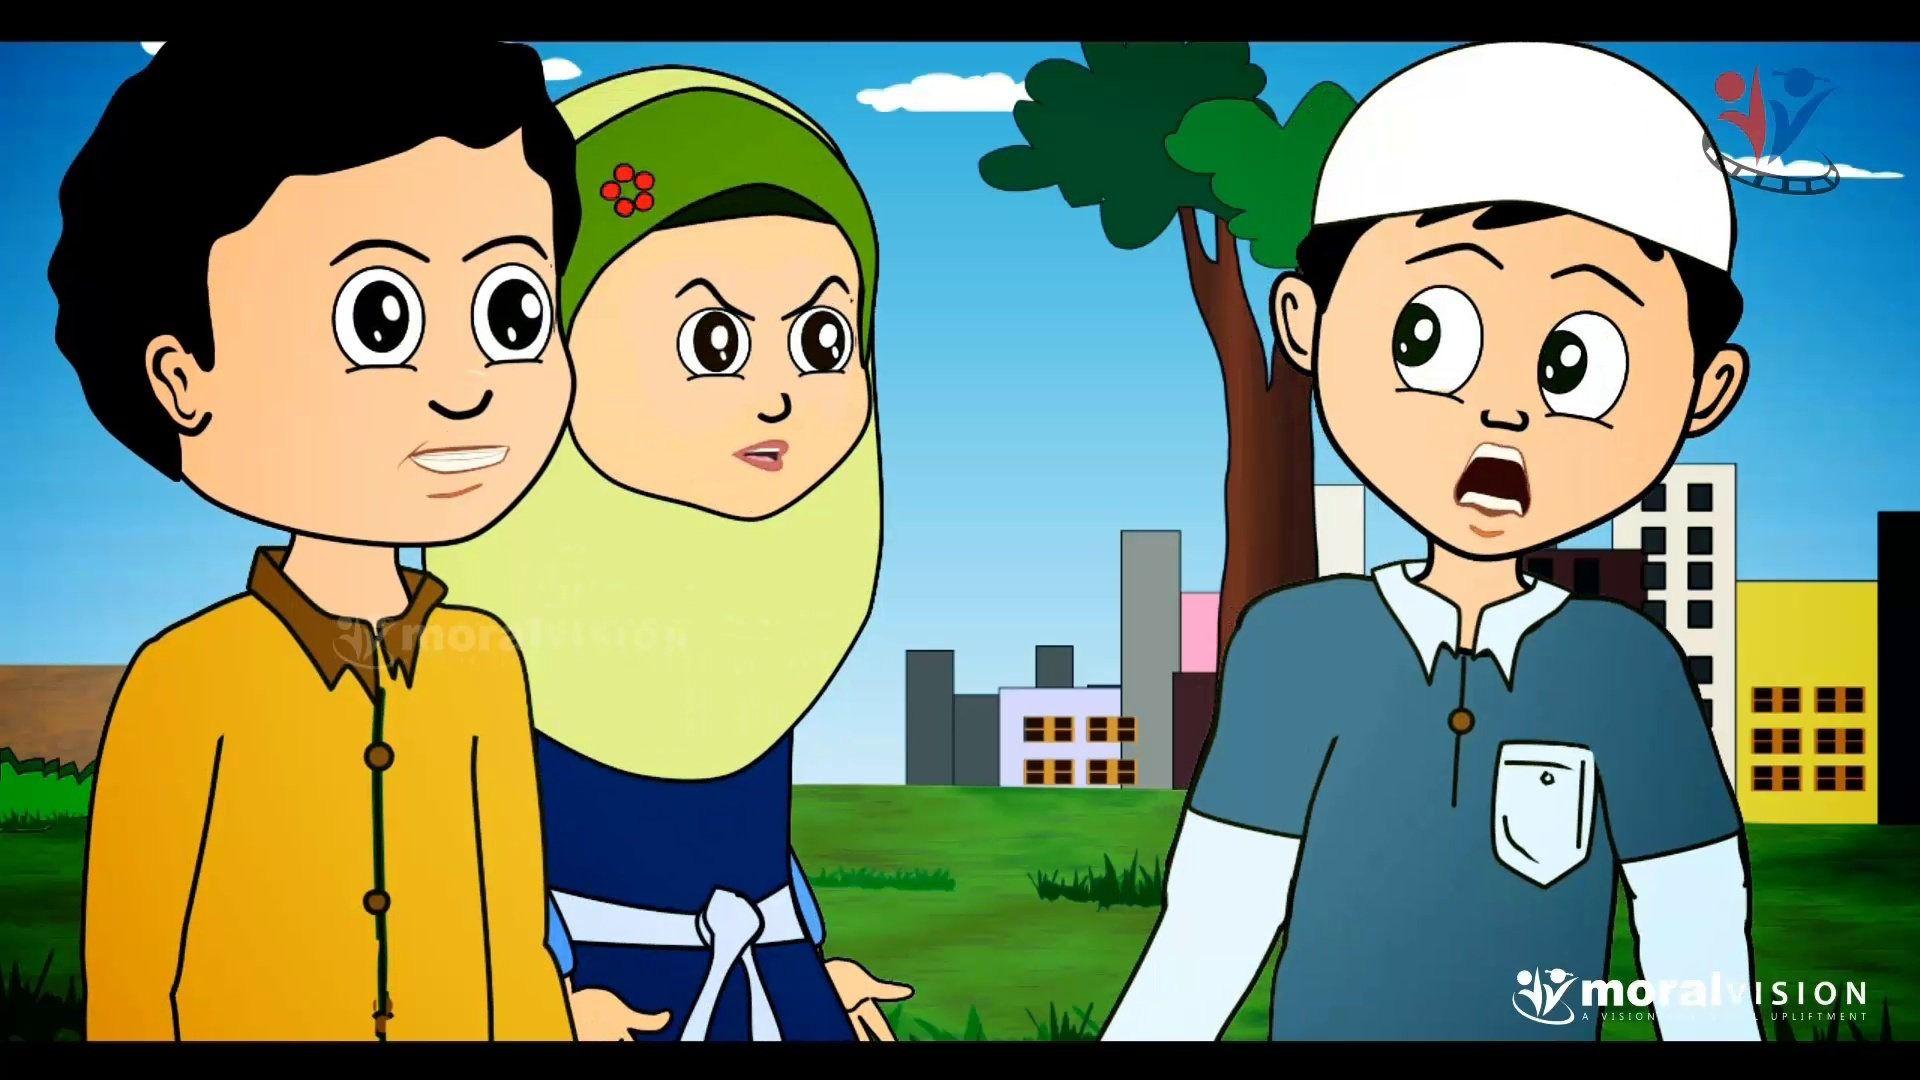 Islamic Cartoon Wallpapers - Top Free Islamic Cartoon Backgrounds